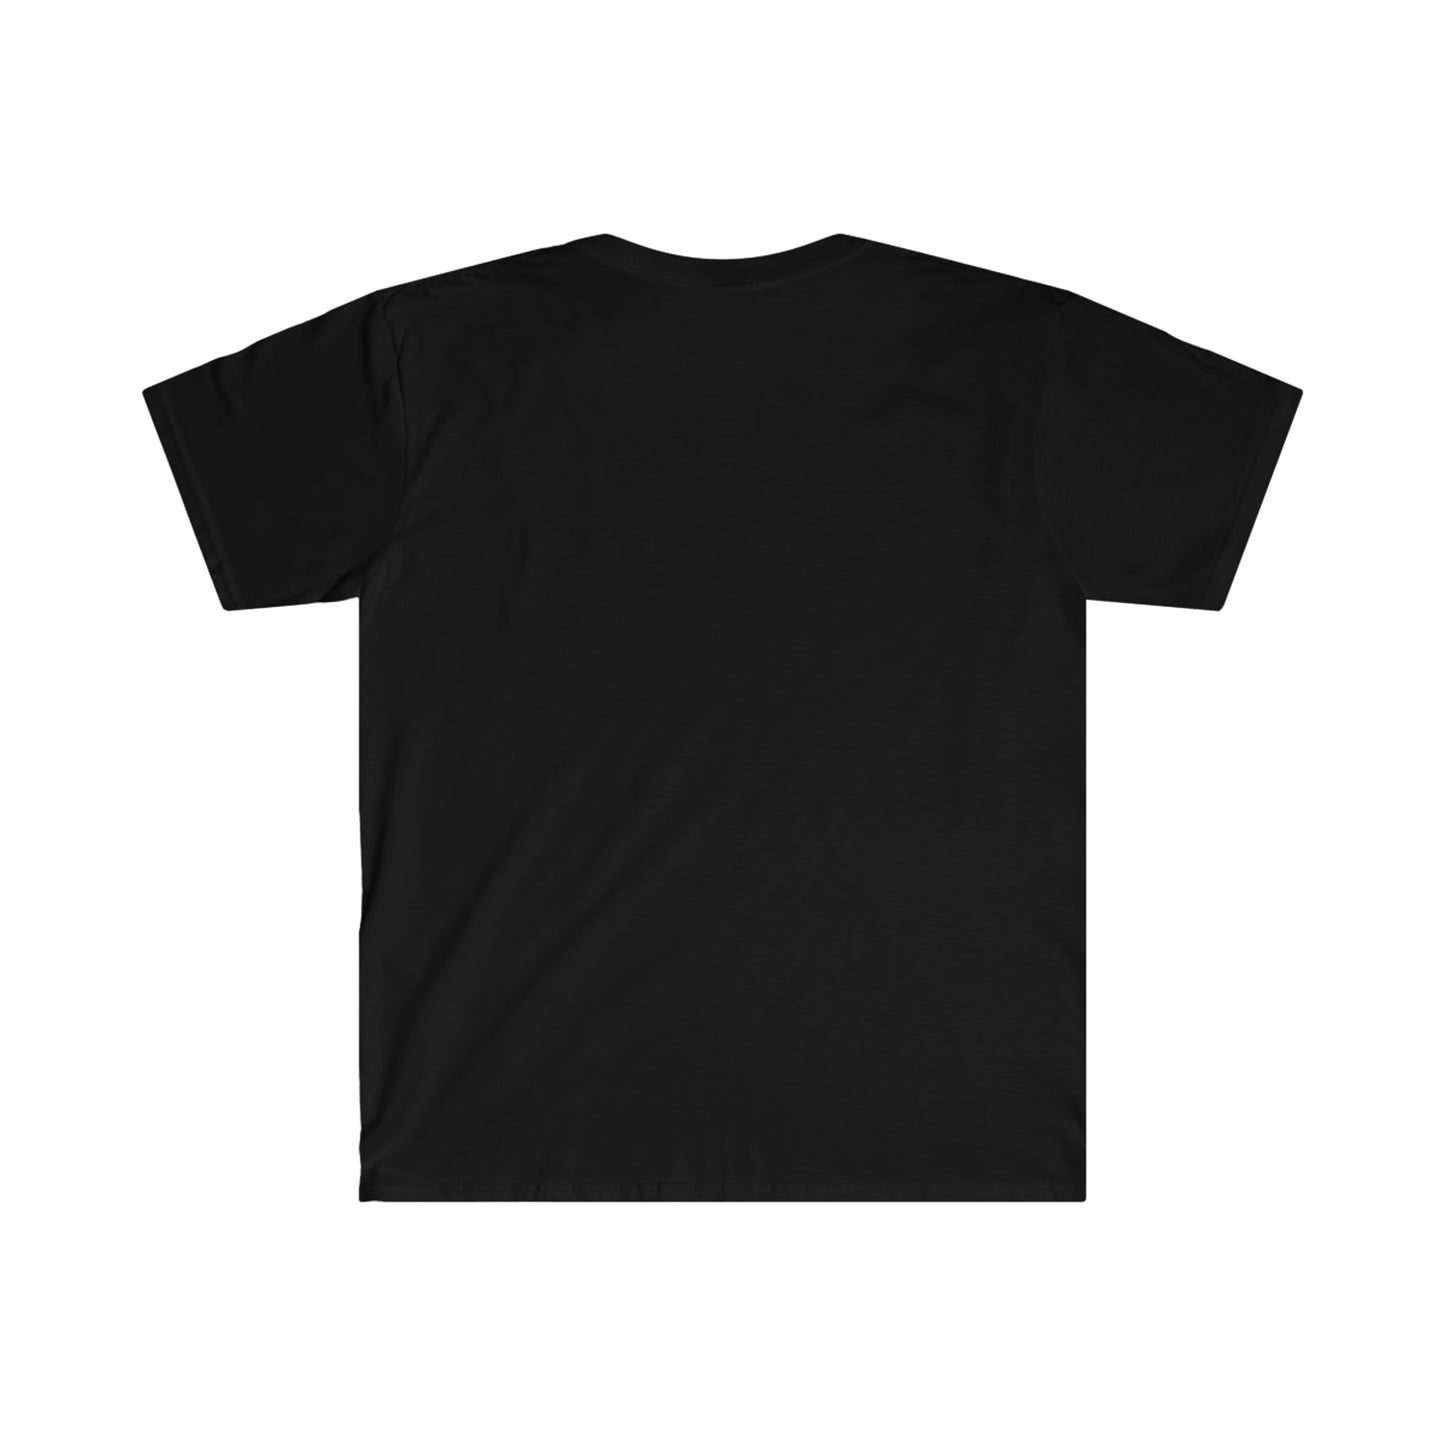 SLAUGHTER HOUSE GWA WARFARE Unisex Softstyle T-Shirt